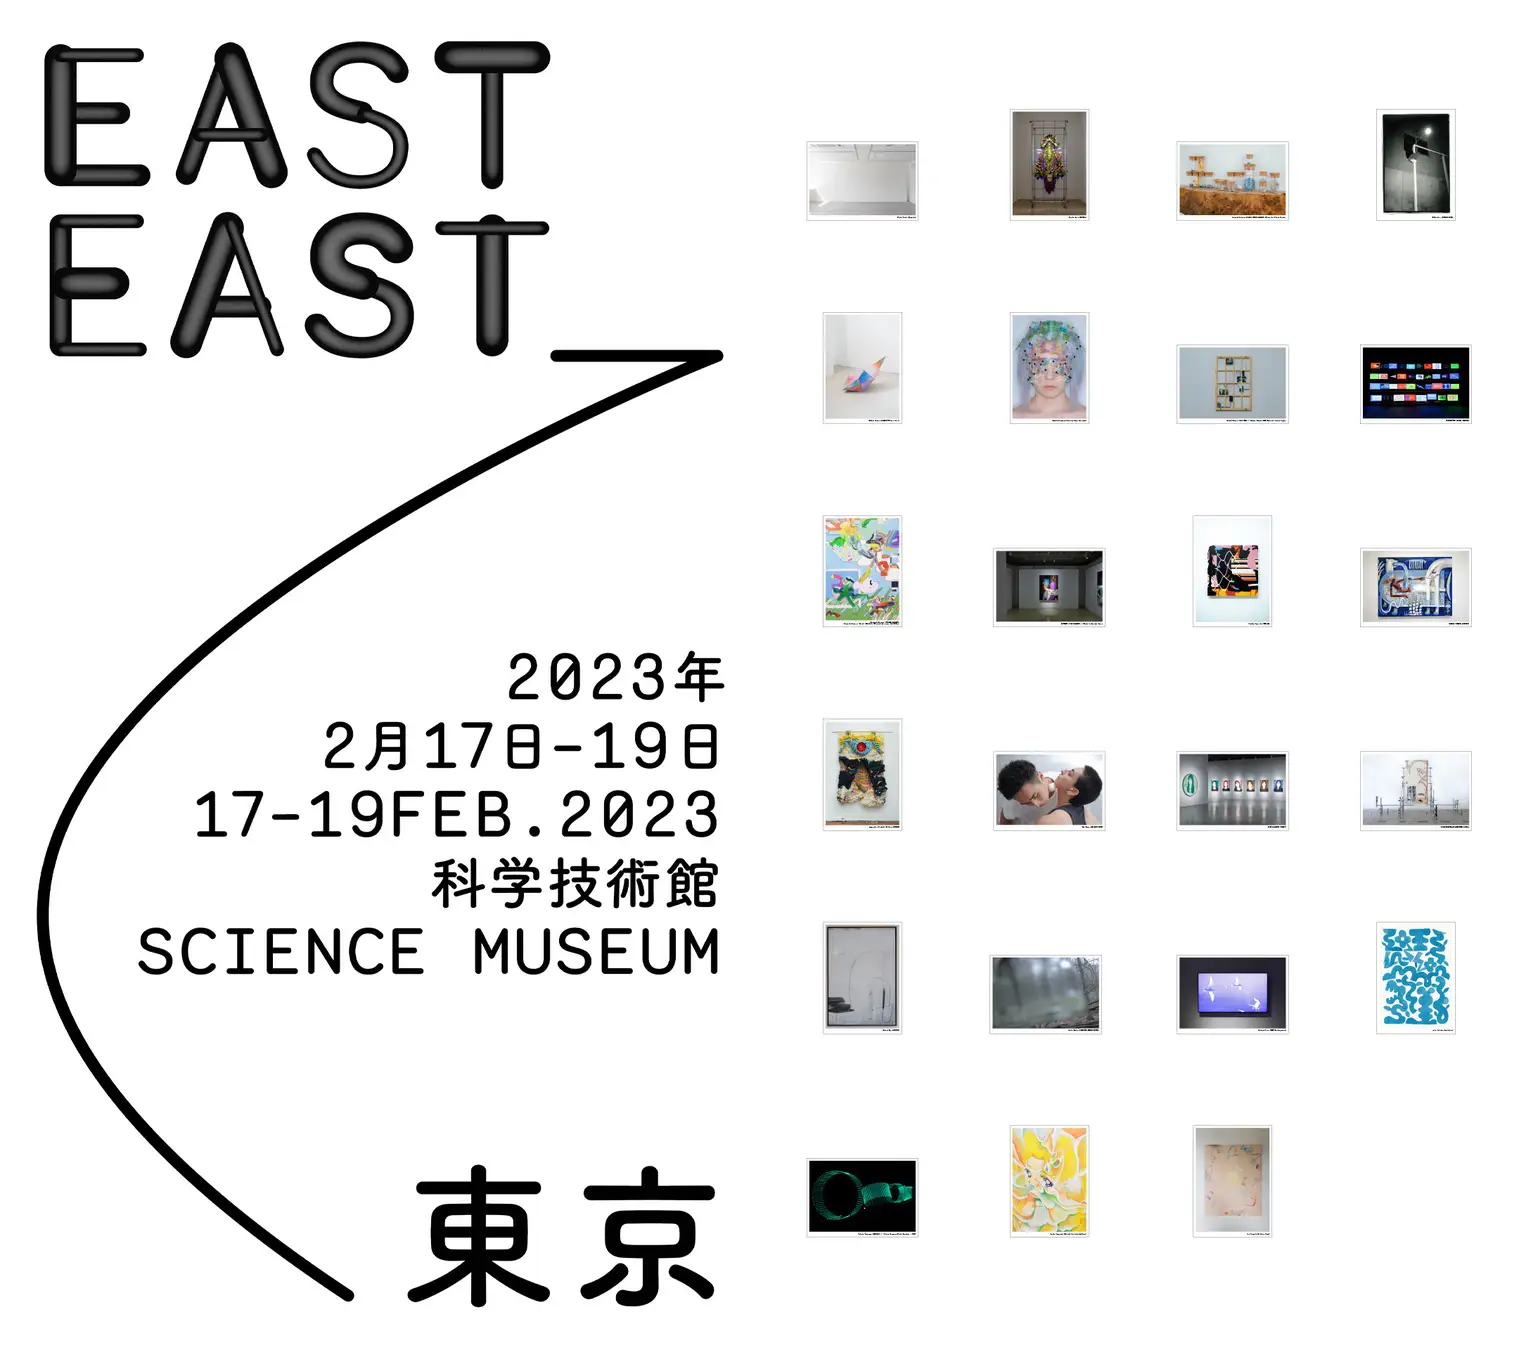 「EASTEAST_TOKYO 2023」、新たに食、パフォーマンス、トークイベントなどのプロジェクト、プログラムが追加発表